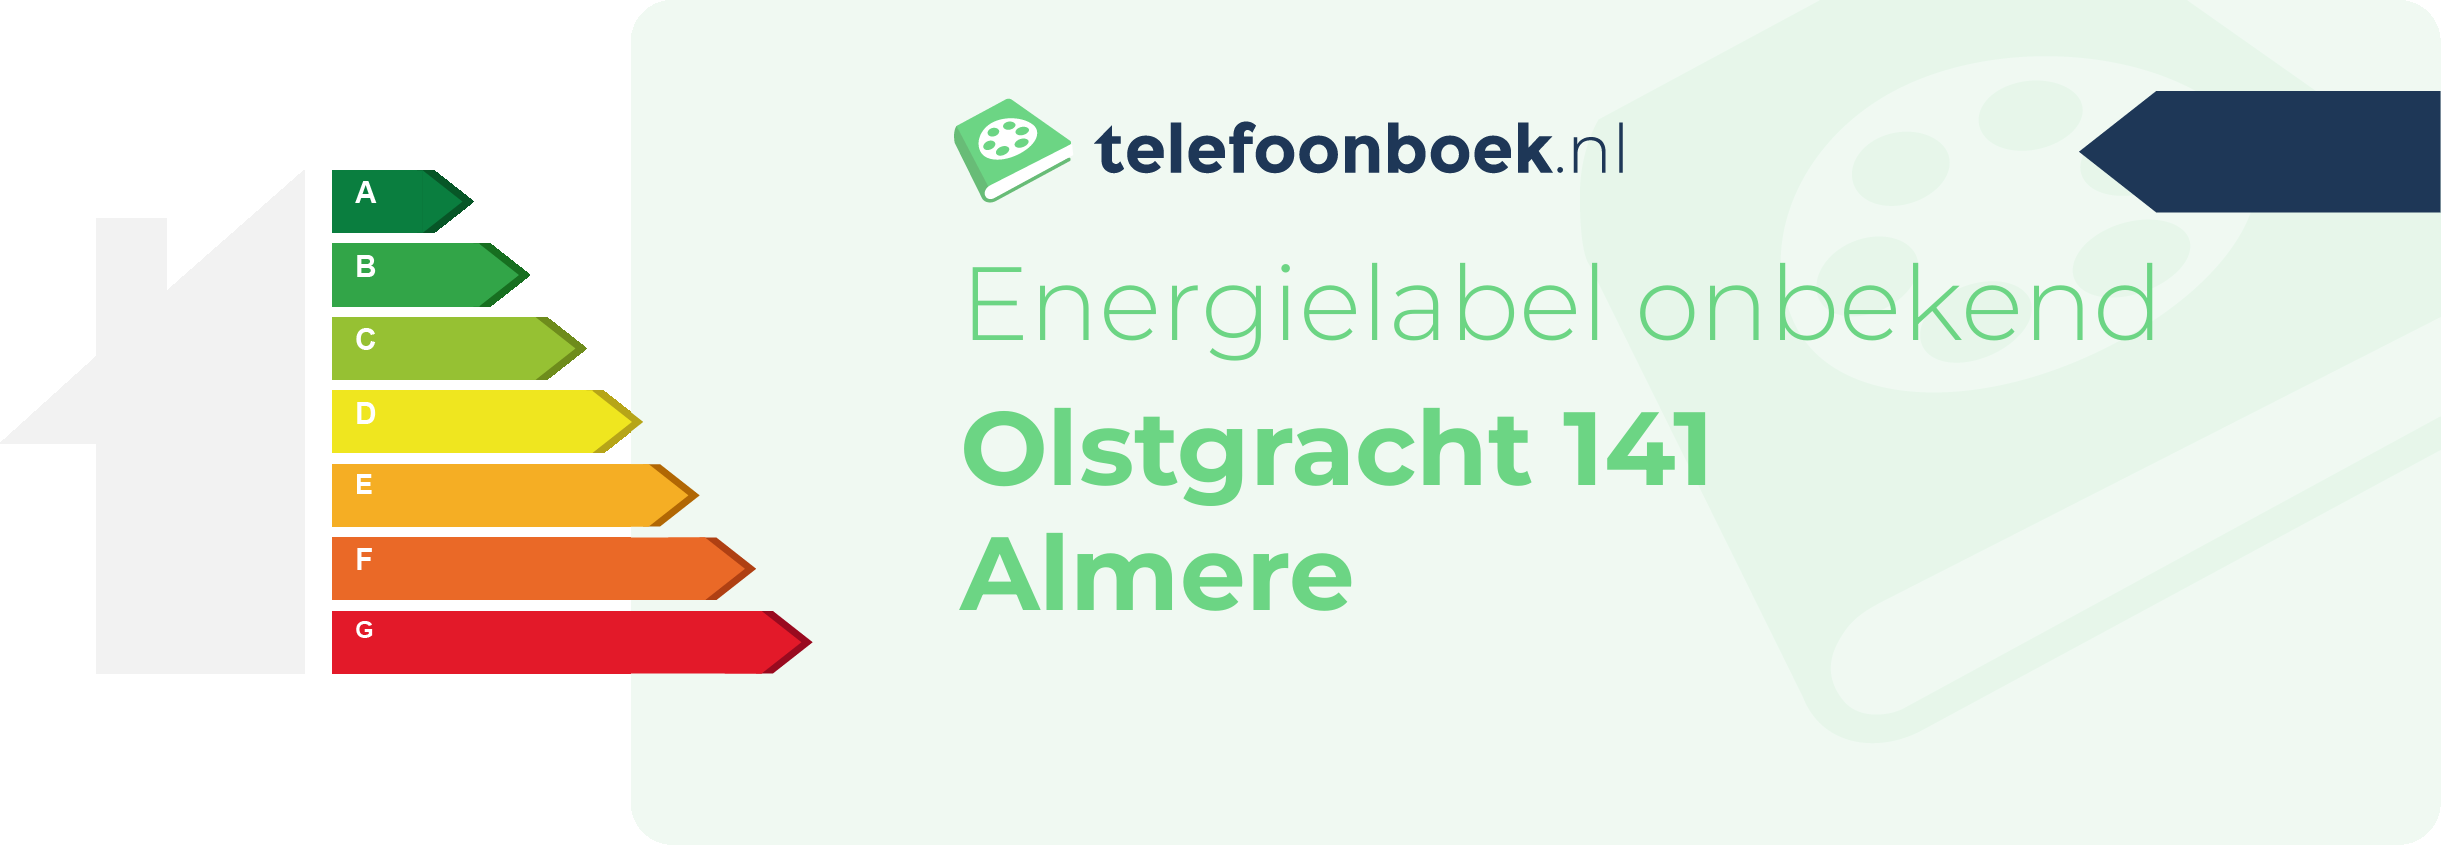 Energielabel Olstgracht 141 Almere